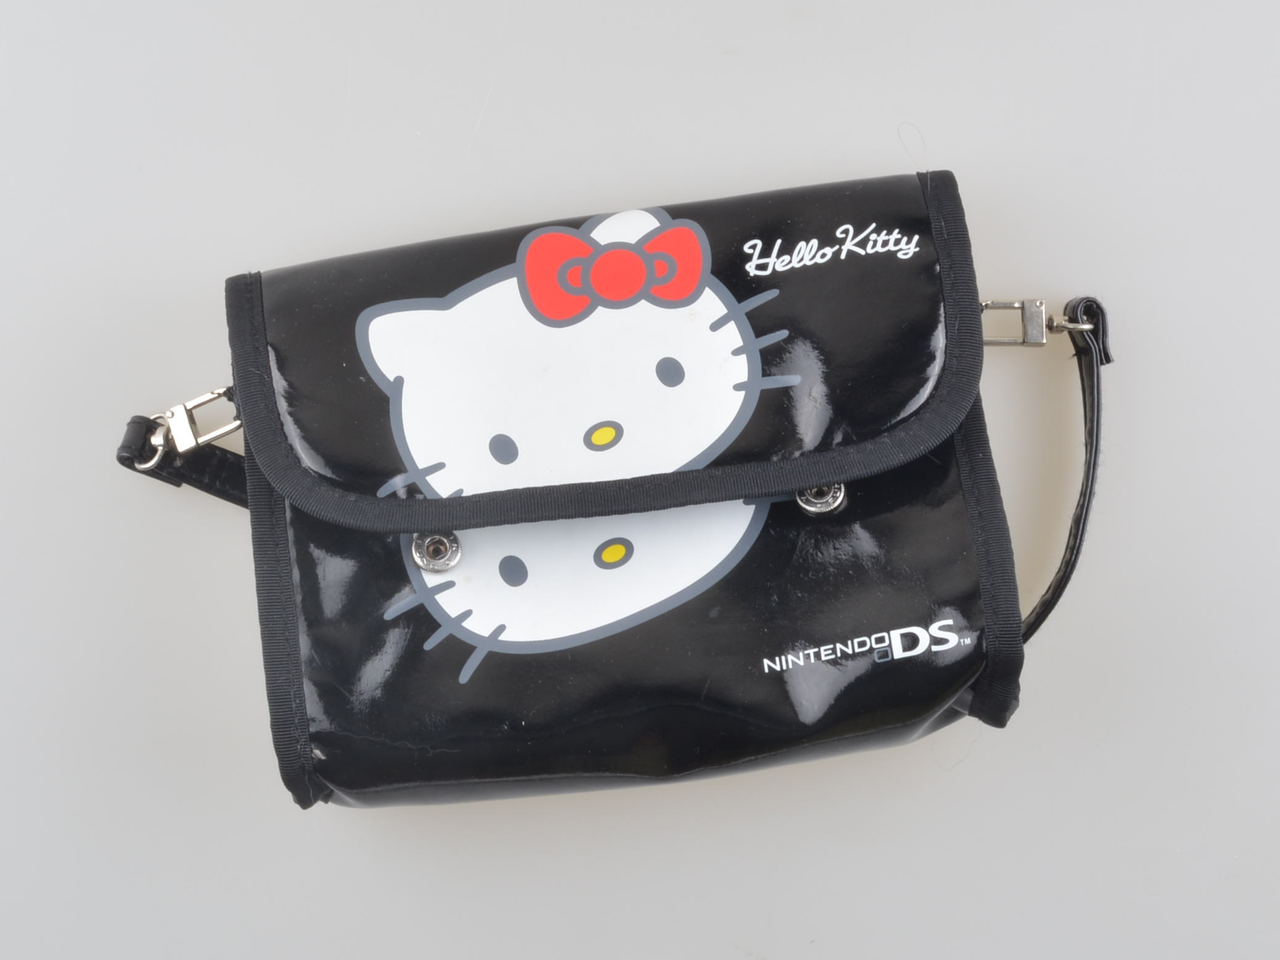 Hello Kitty Nintendo DS Bag - Nintendo DS Hardware